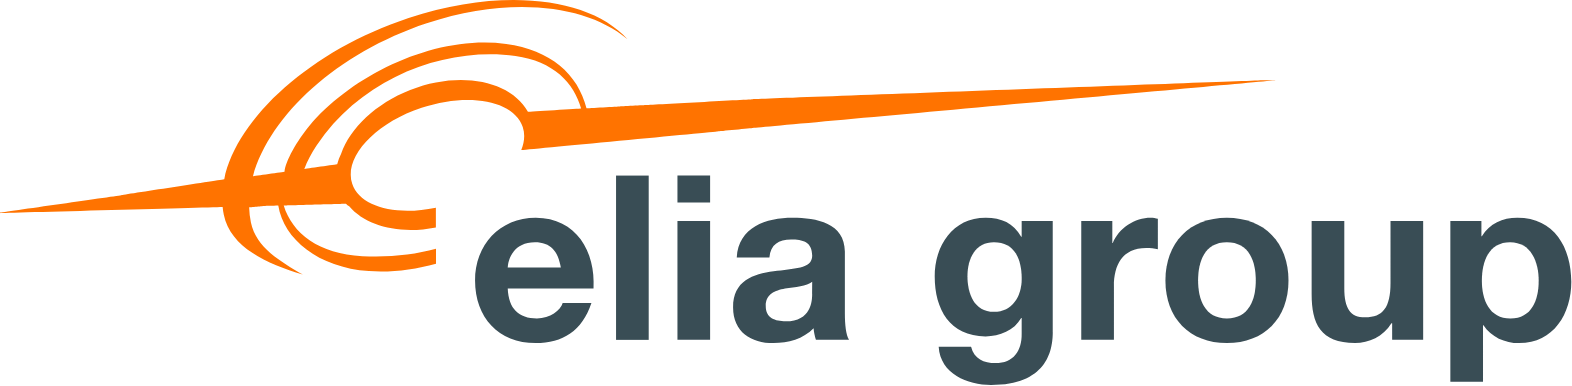 Elia Group logo large (transparent PNG)